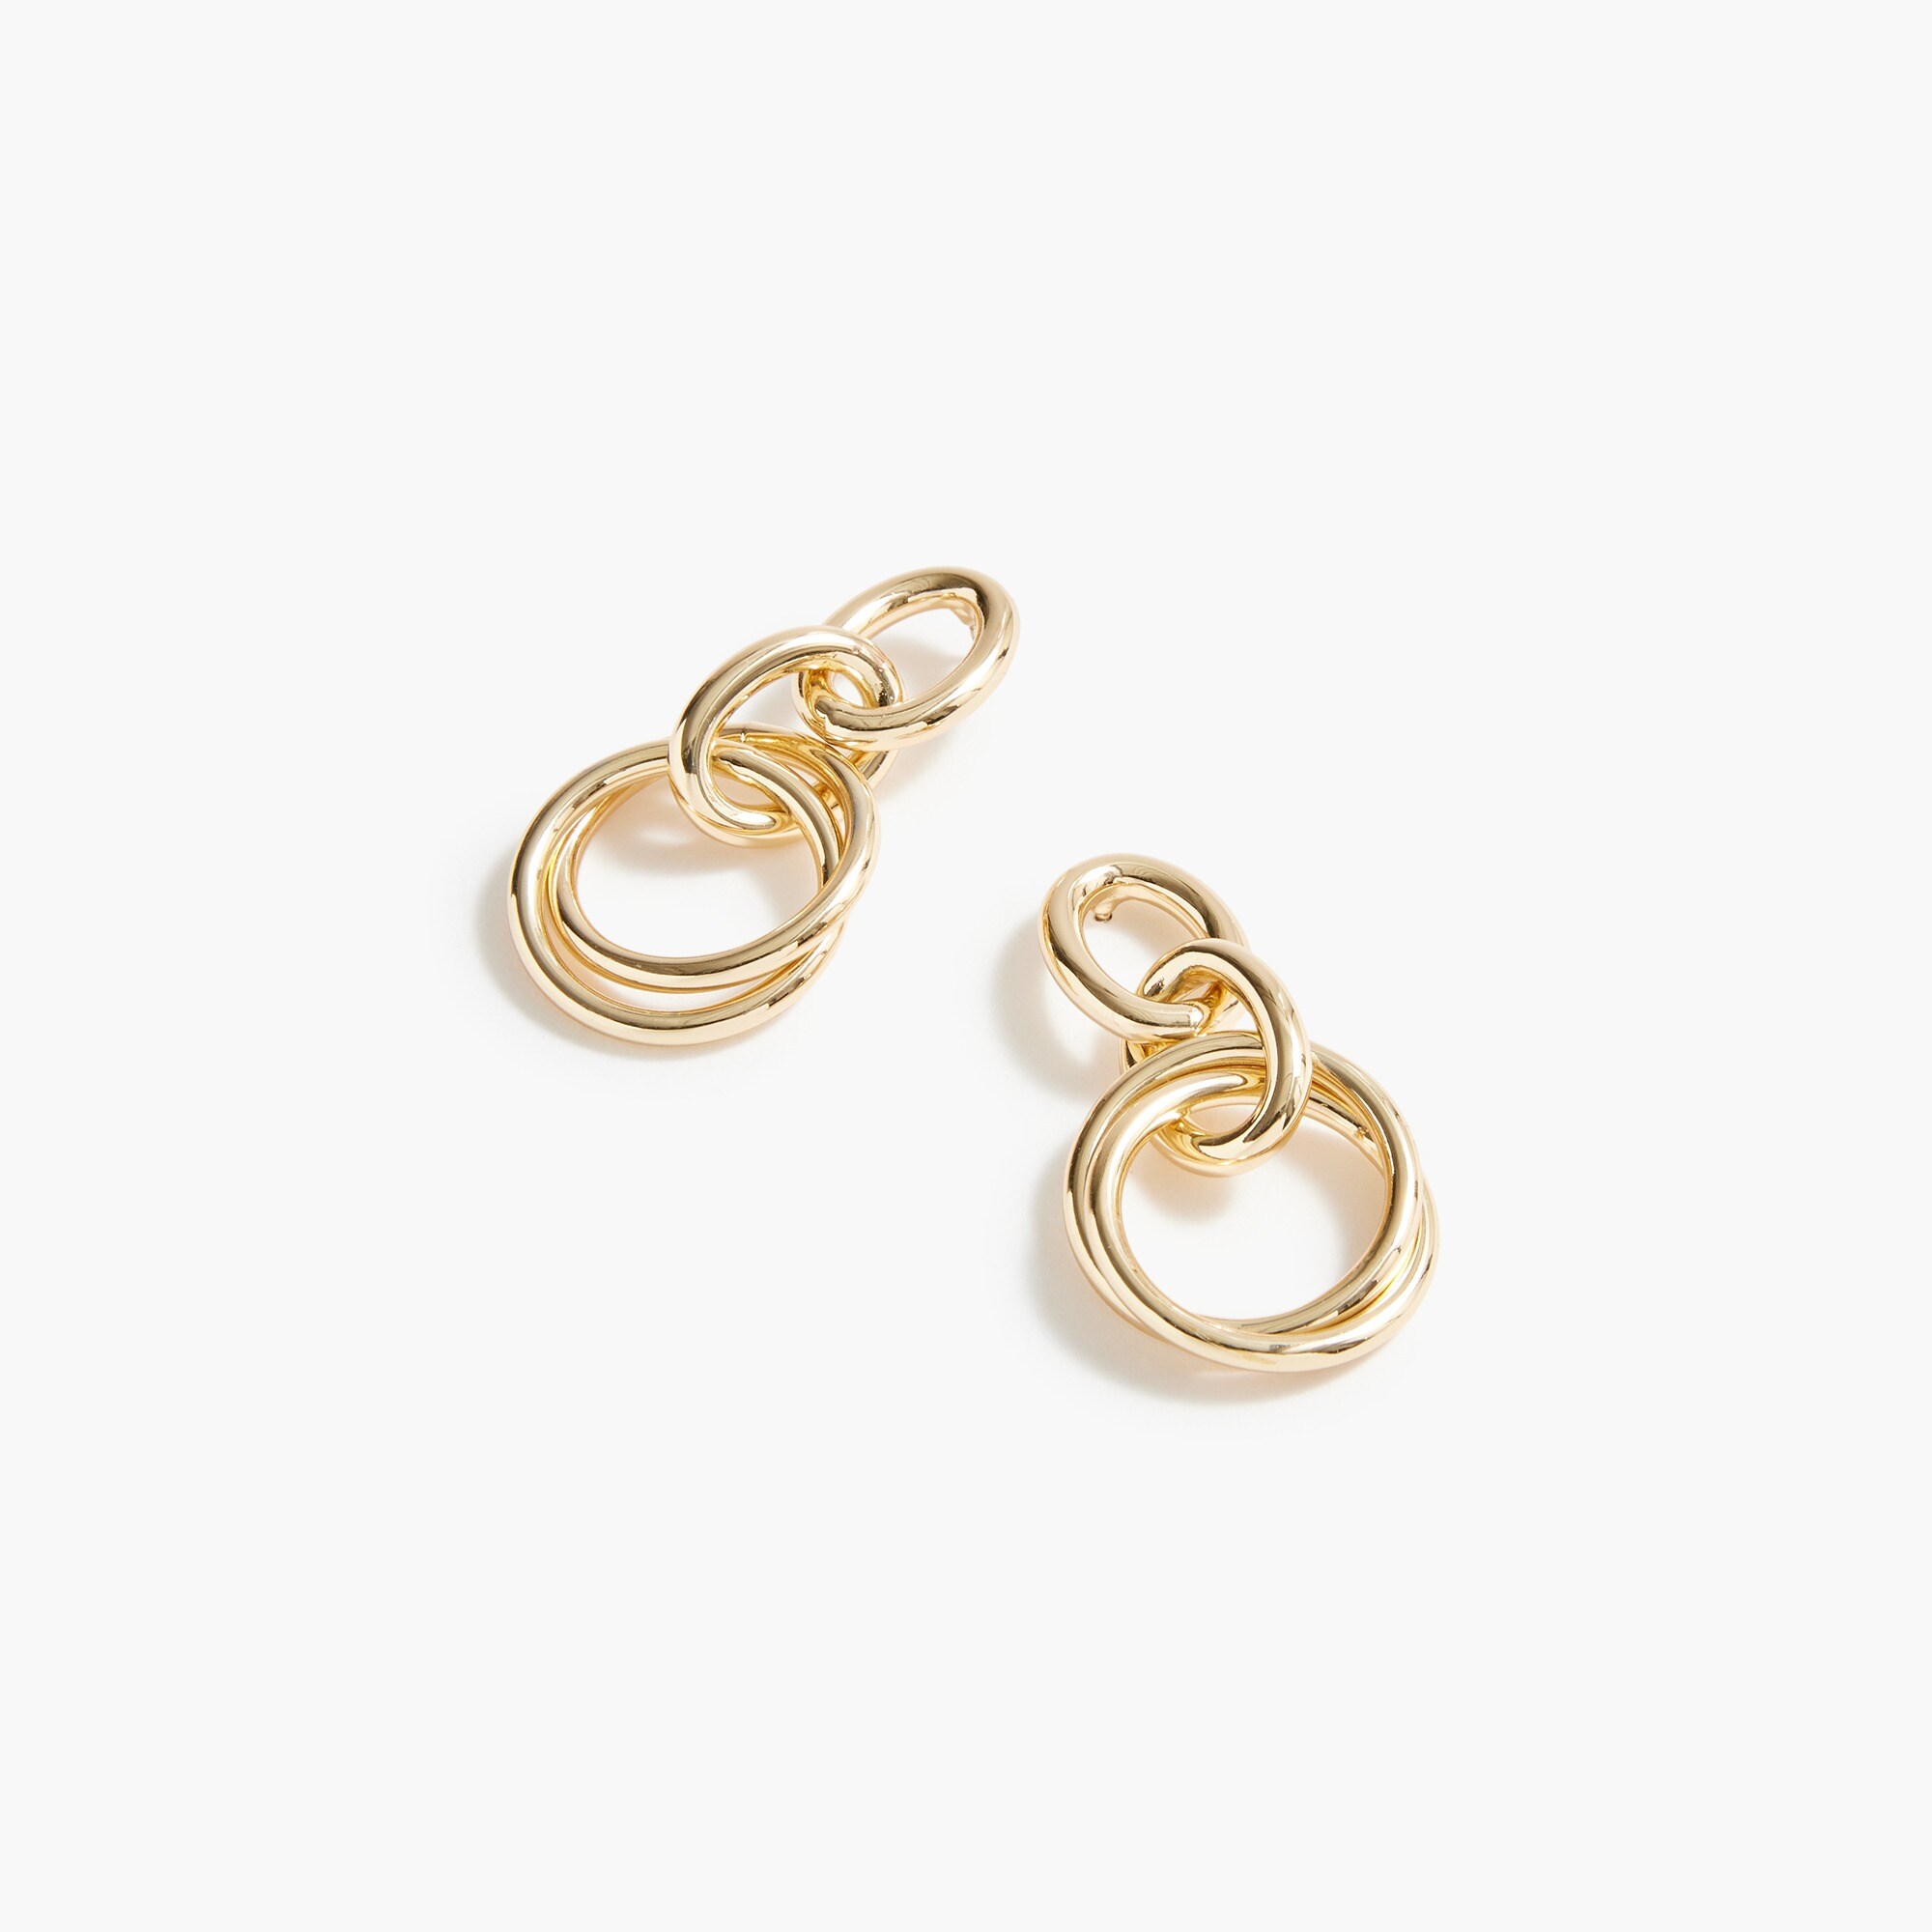  Gold link statement earrings